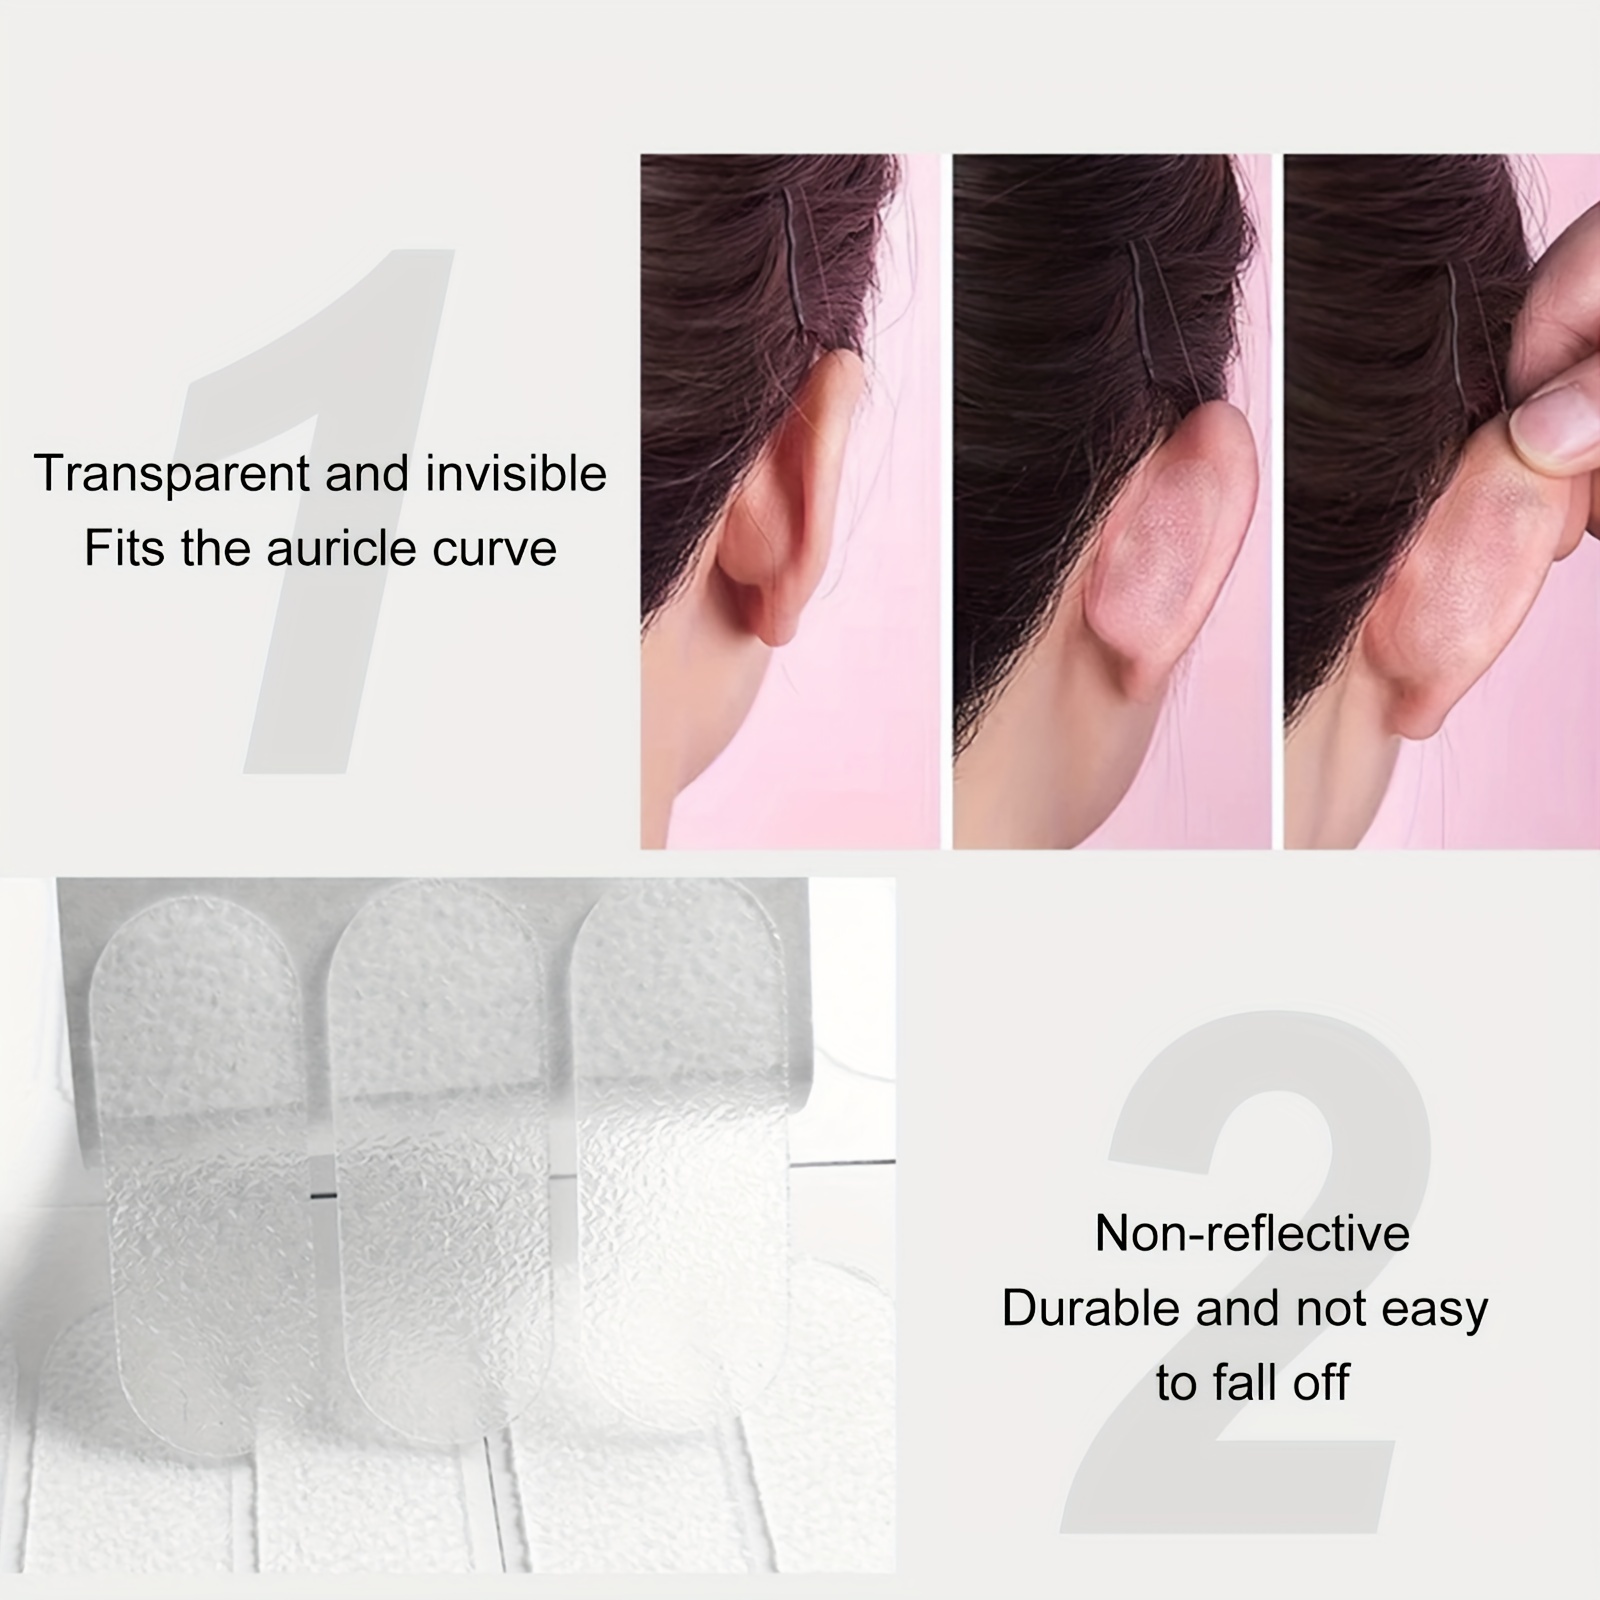 Elf Ear Stickers Veneer Ears Become Ear Correction Ear Stand